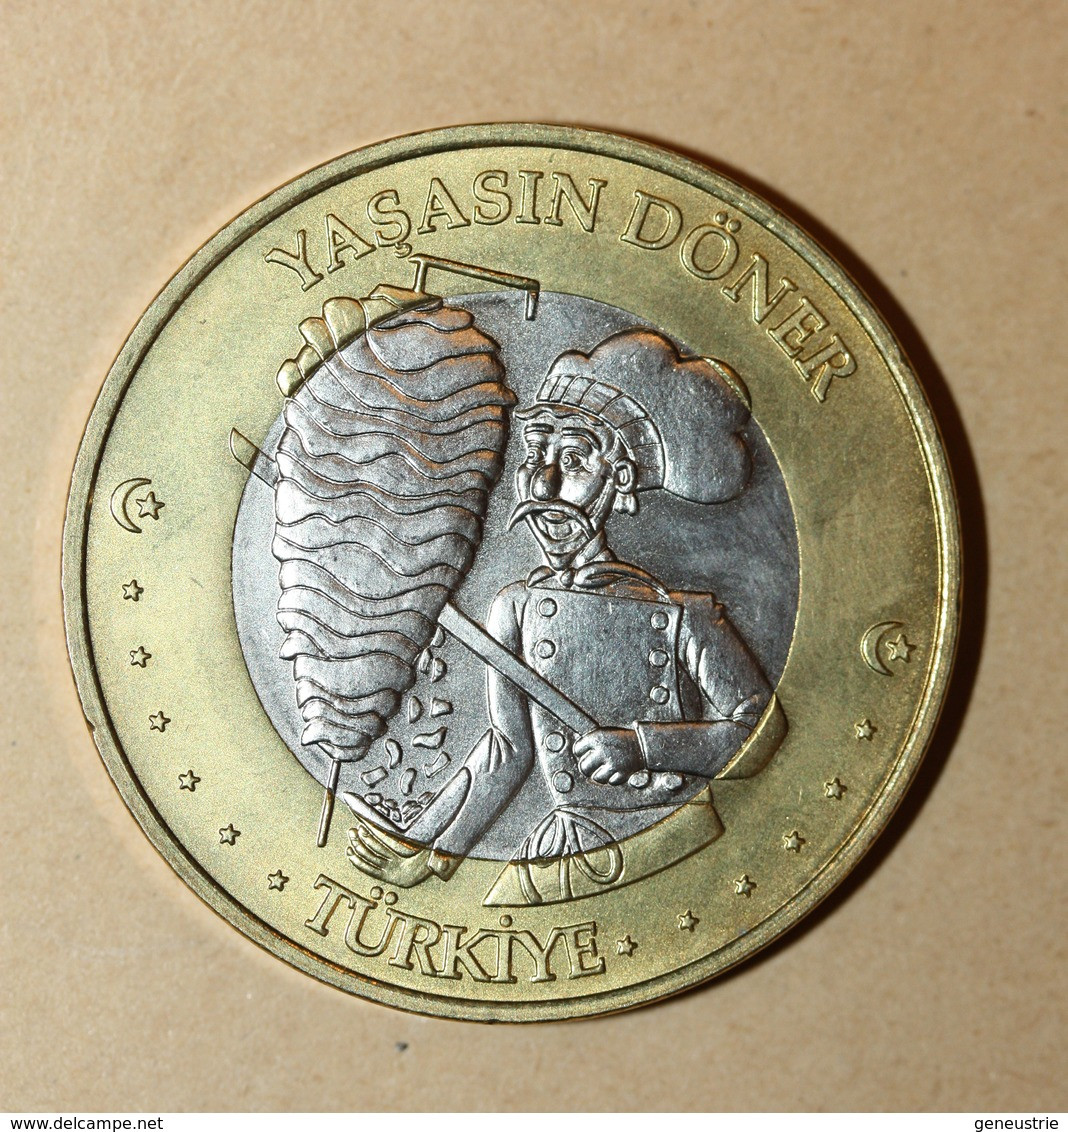 Monnaie Jeton De 3 Euros ? "Turkiye 2004 / Yasasin Döner" - Essais Privés / Non-officiels